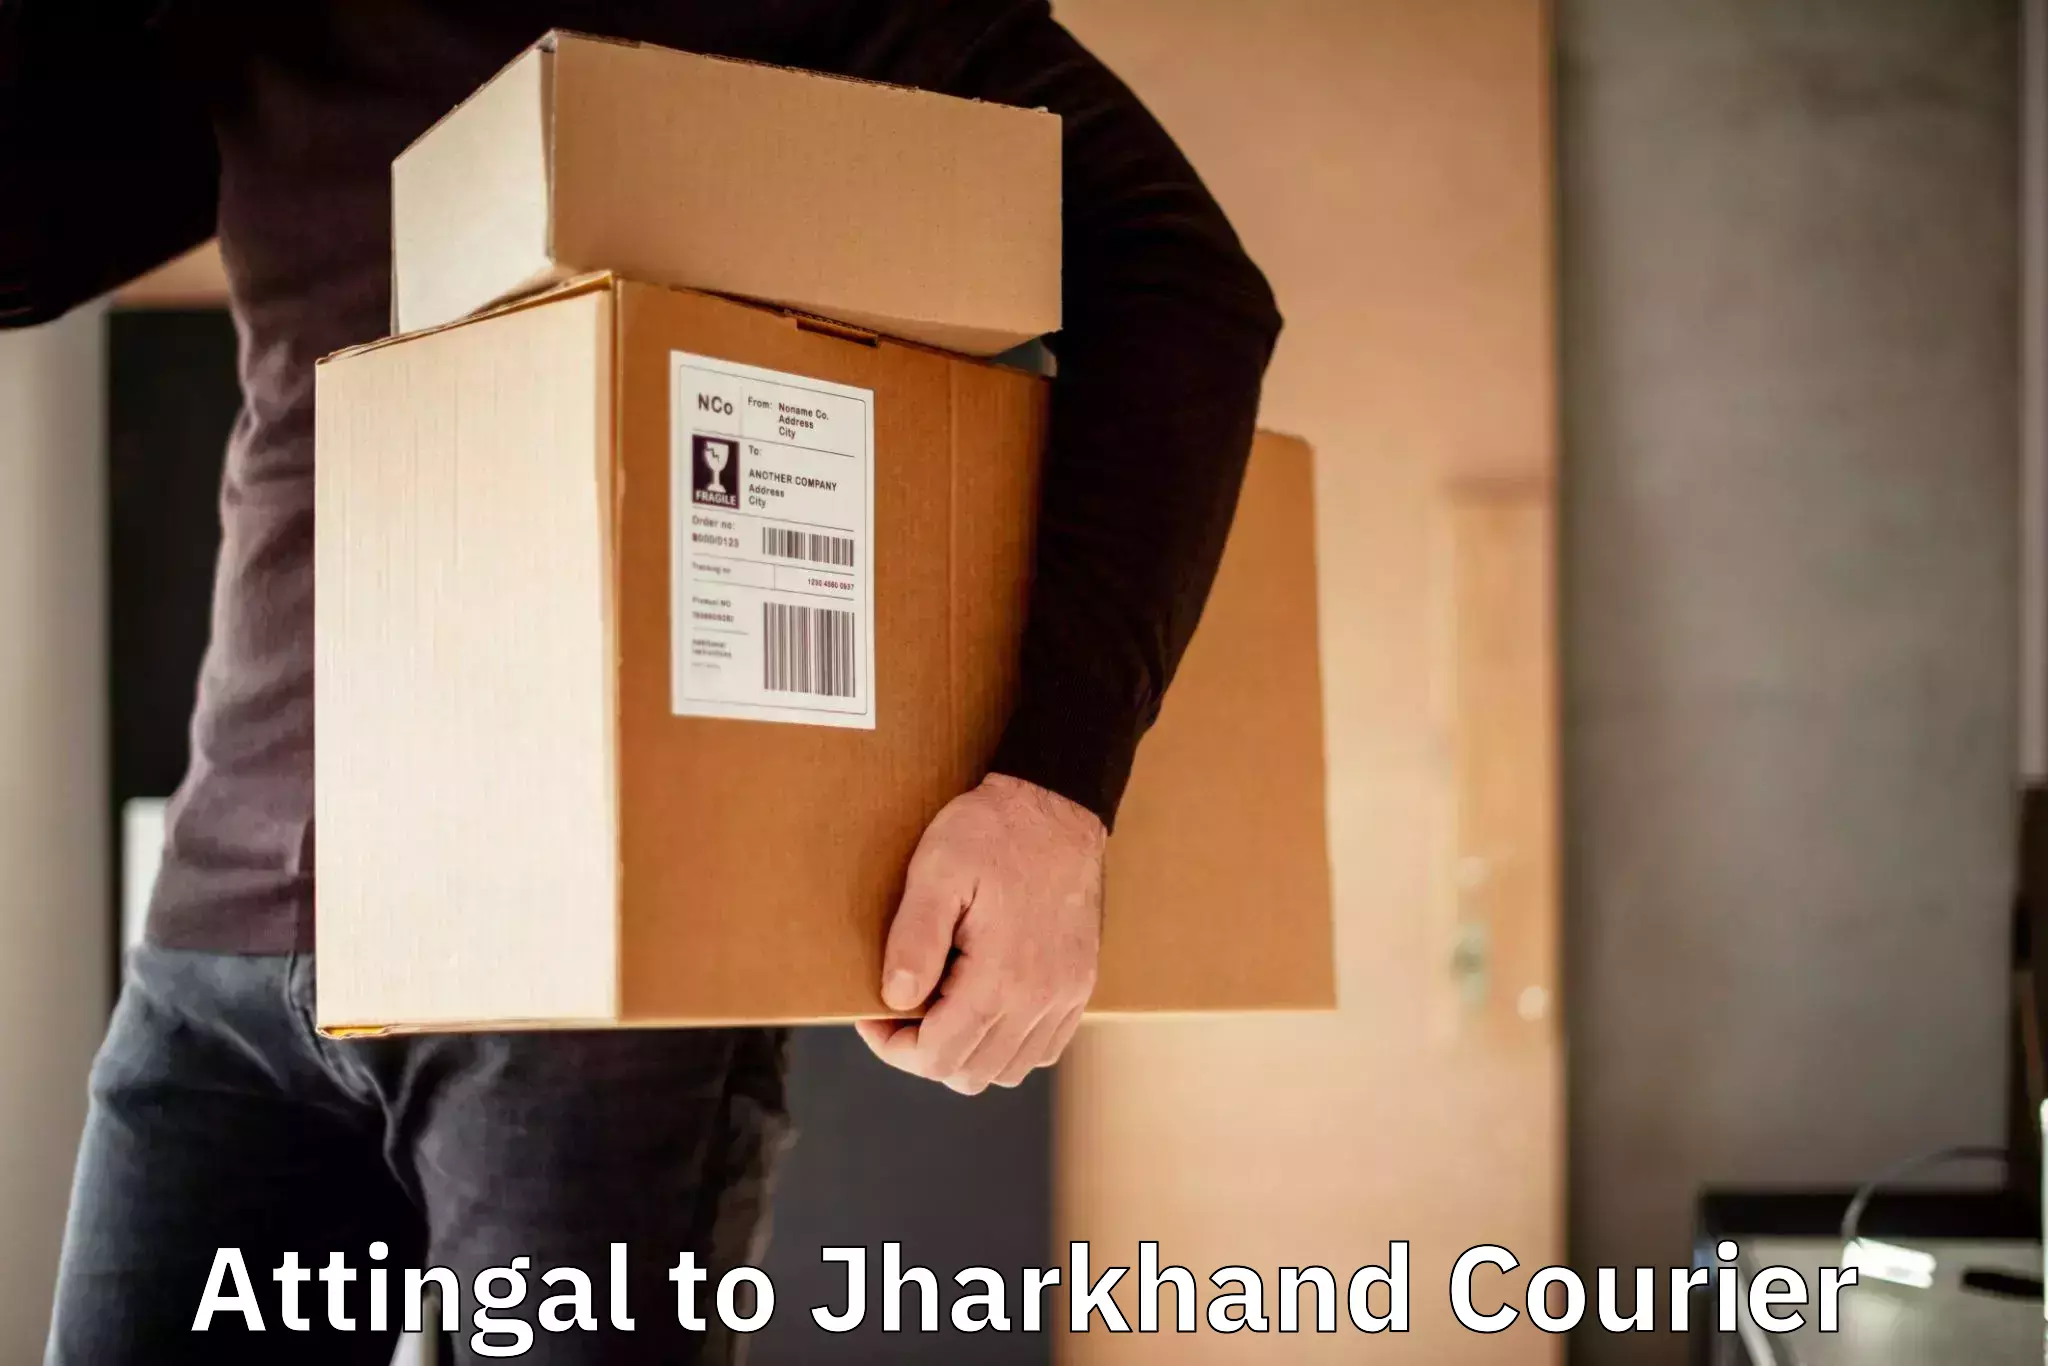 Courier service comparison Attingal to Jharkhand